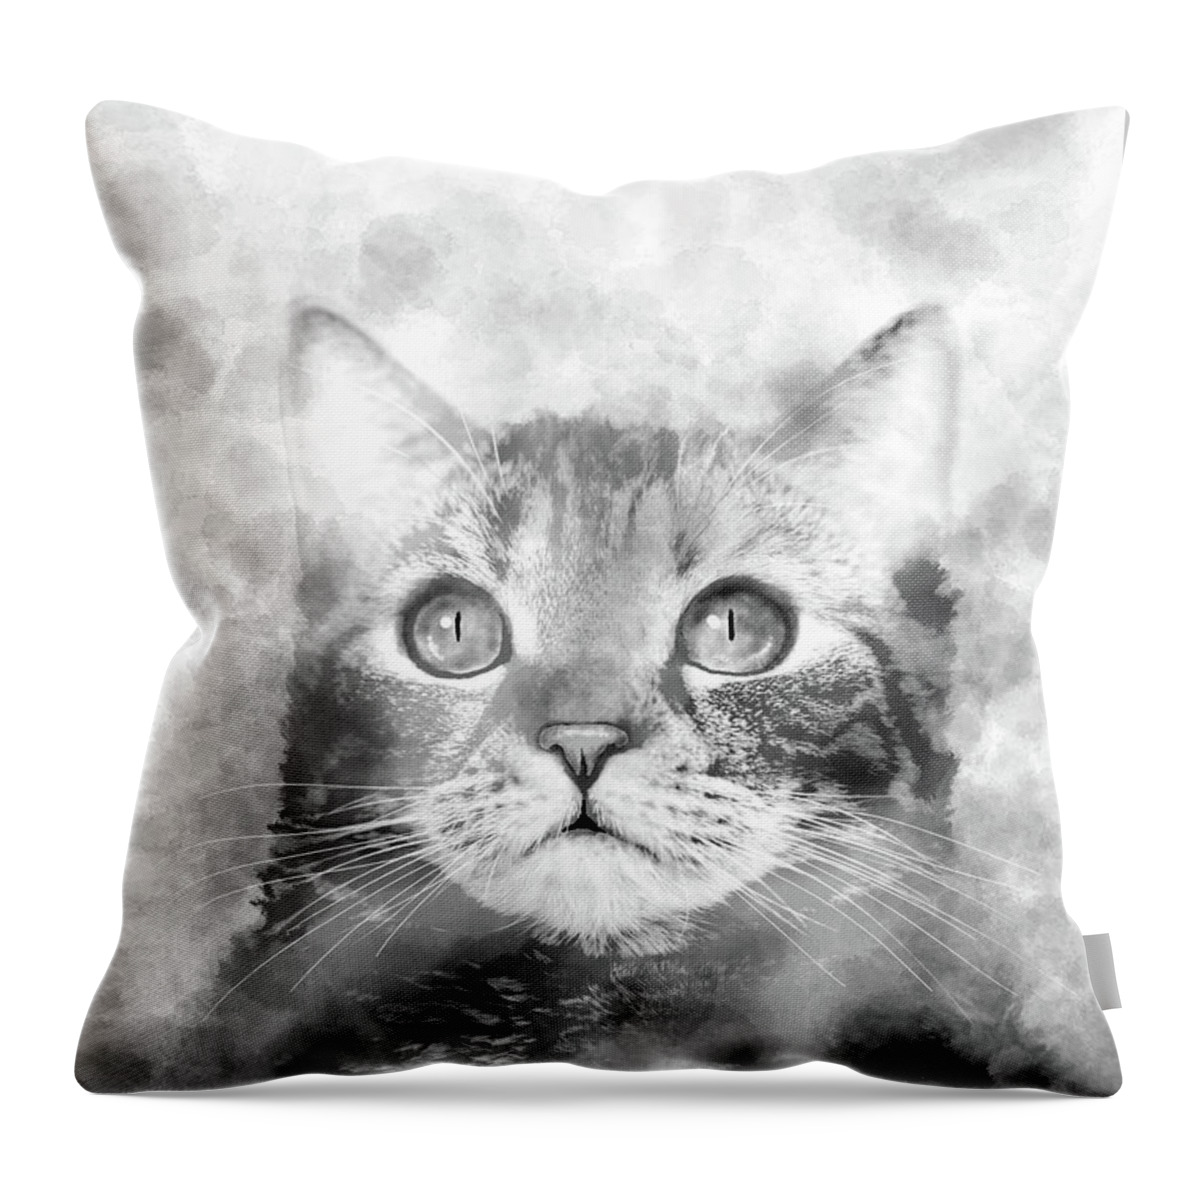 Cat Throw Pillow featuring the digital art Cat 664 by artist Lucie Dumas by Lucie Dumas